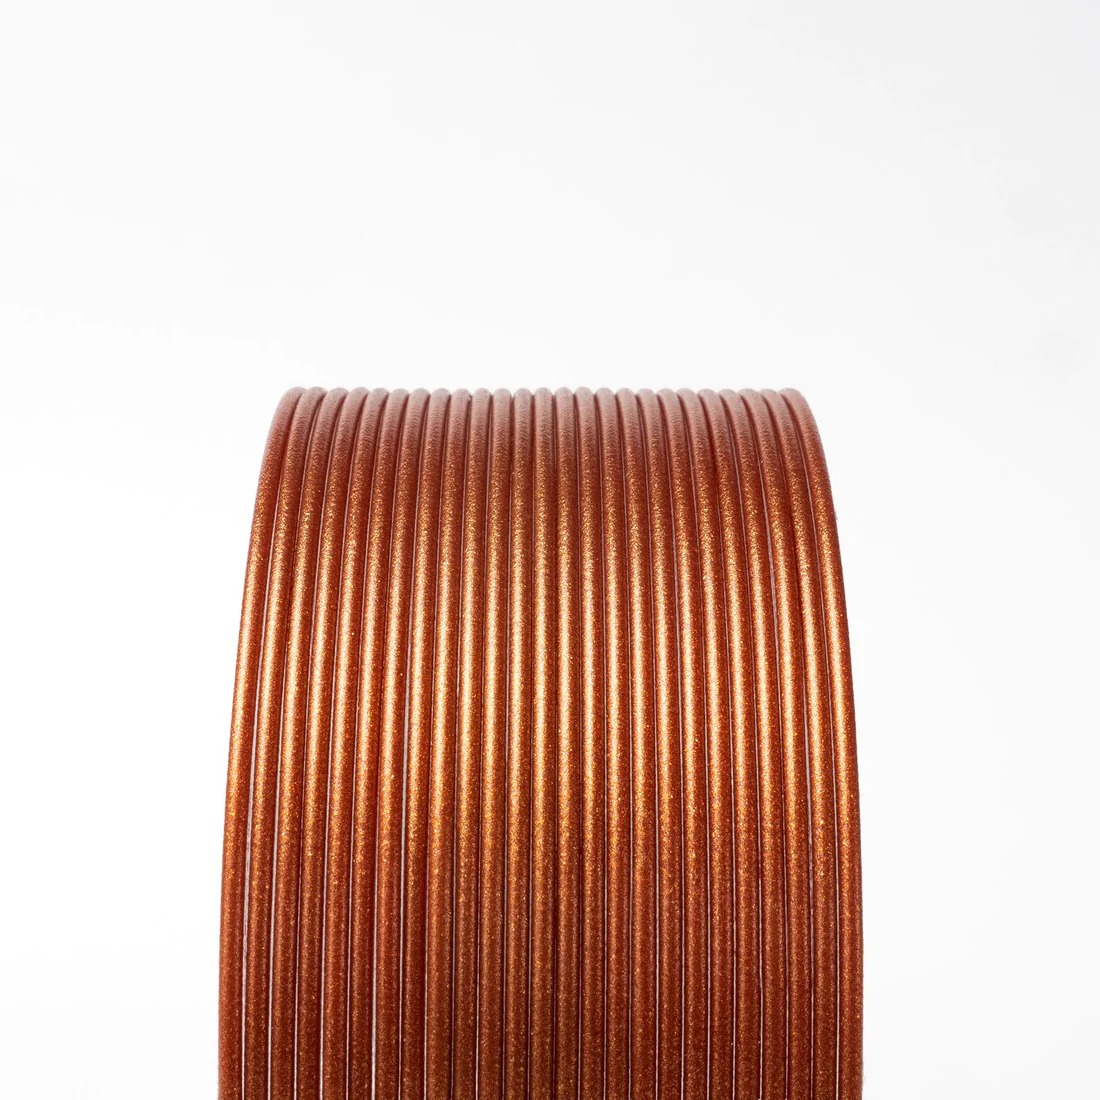 Burnt Orange Metallic Copper HTPLA  Proto-pasta 2.85mm 500gms 3D printing filament